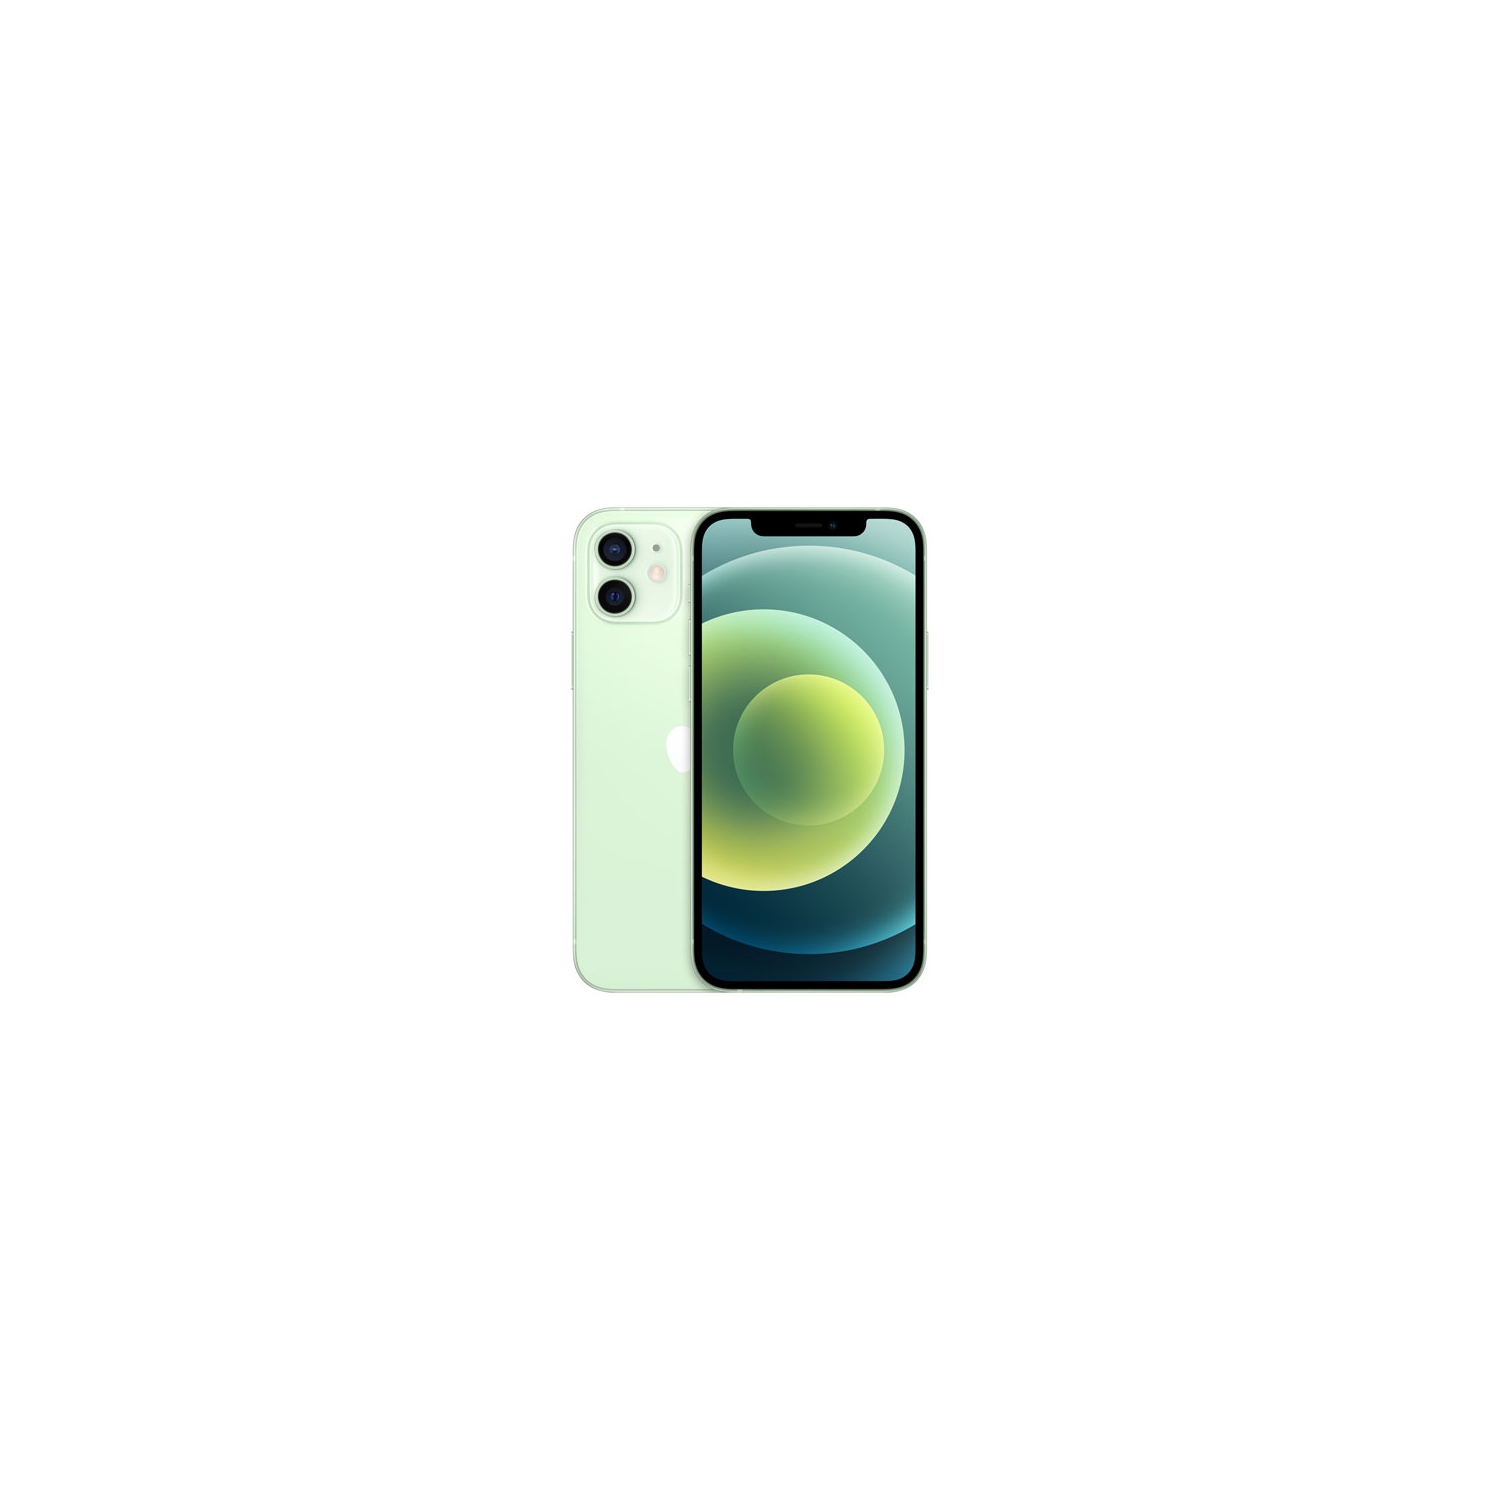 Refurbished (Excellent) - Apple iPhone 12 64GB Smartphone - Green - Unlocked - Certified Refurbished